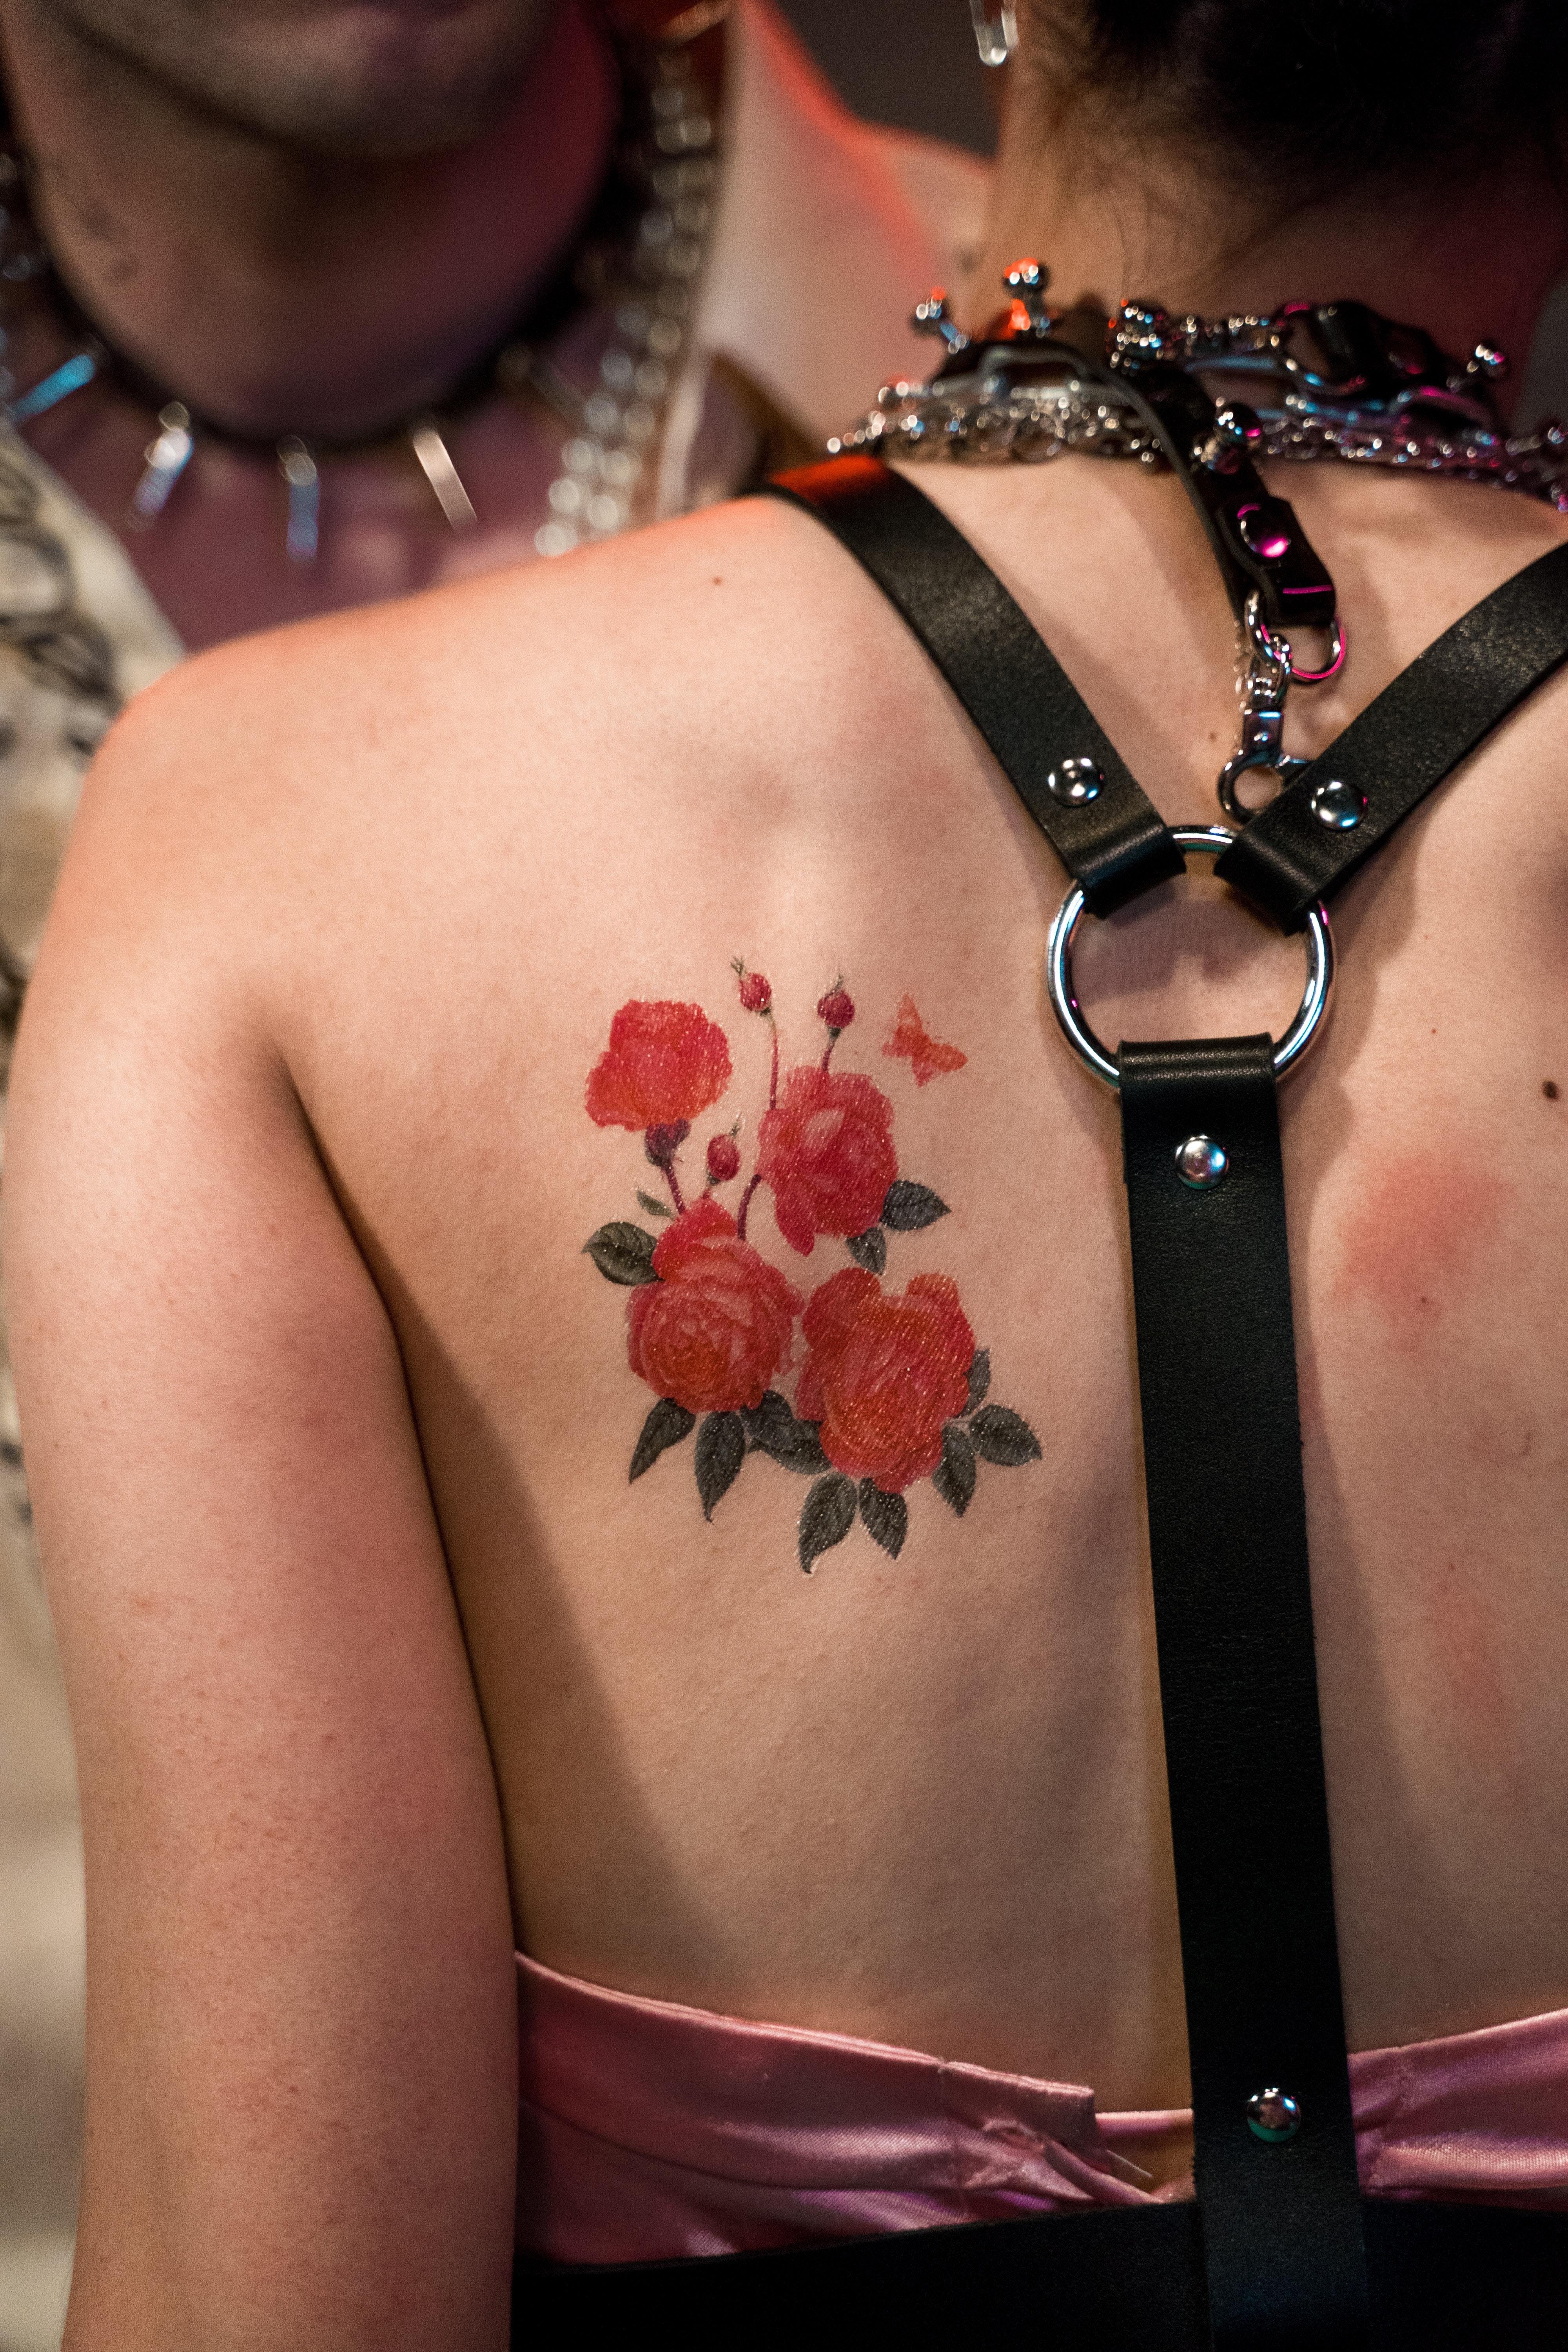 rose spine tattoo